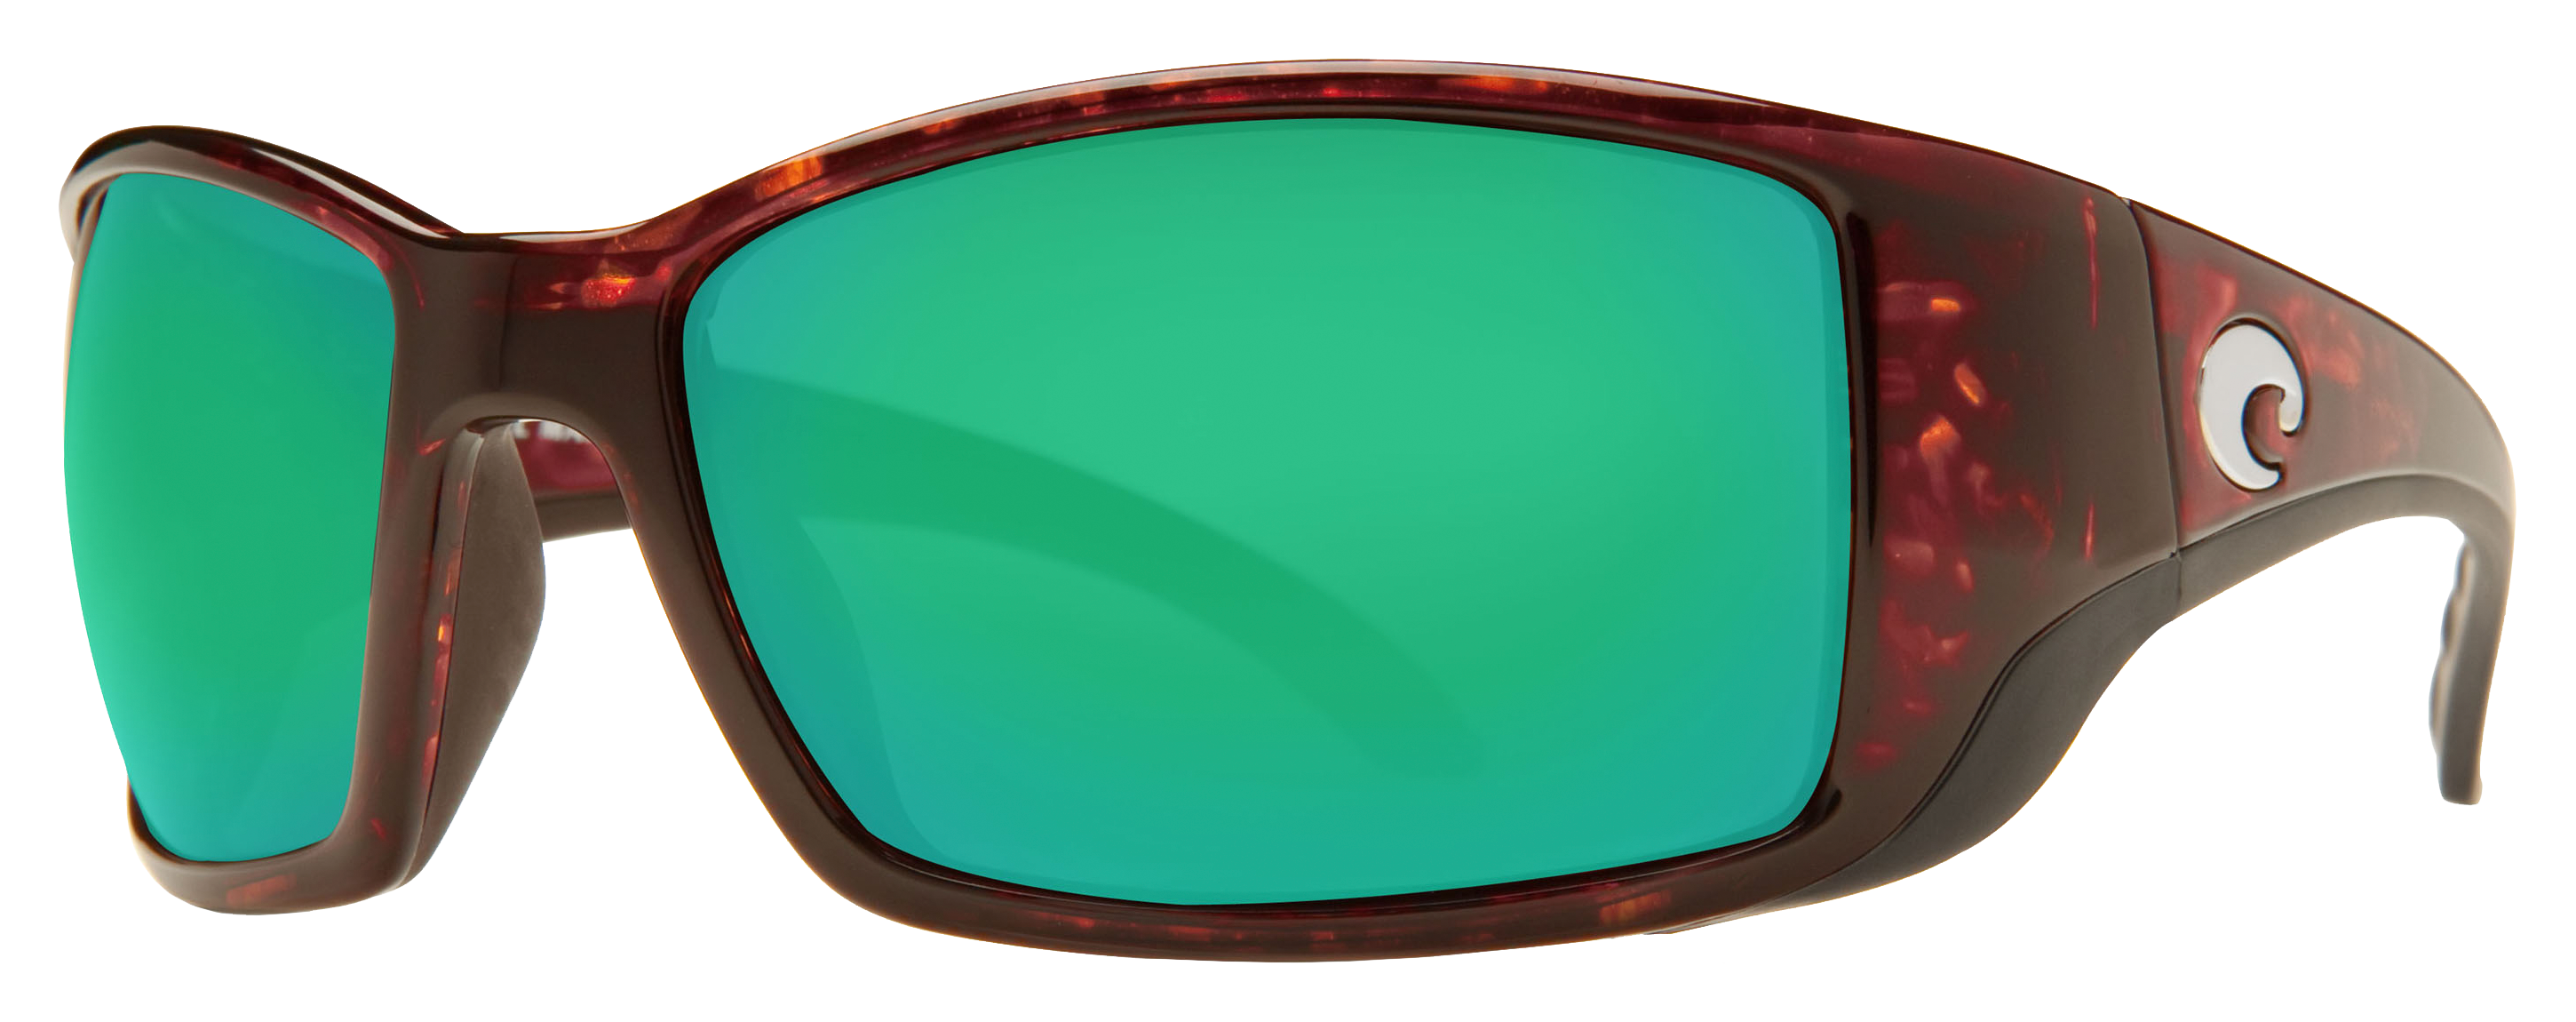 Costa Del Mar Blackfin 580G Glass Polarized Sunglasses - Tortoise/Green Mirror - Large